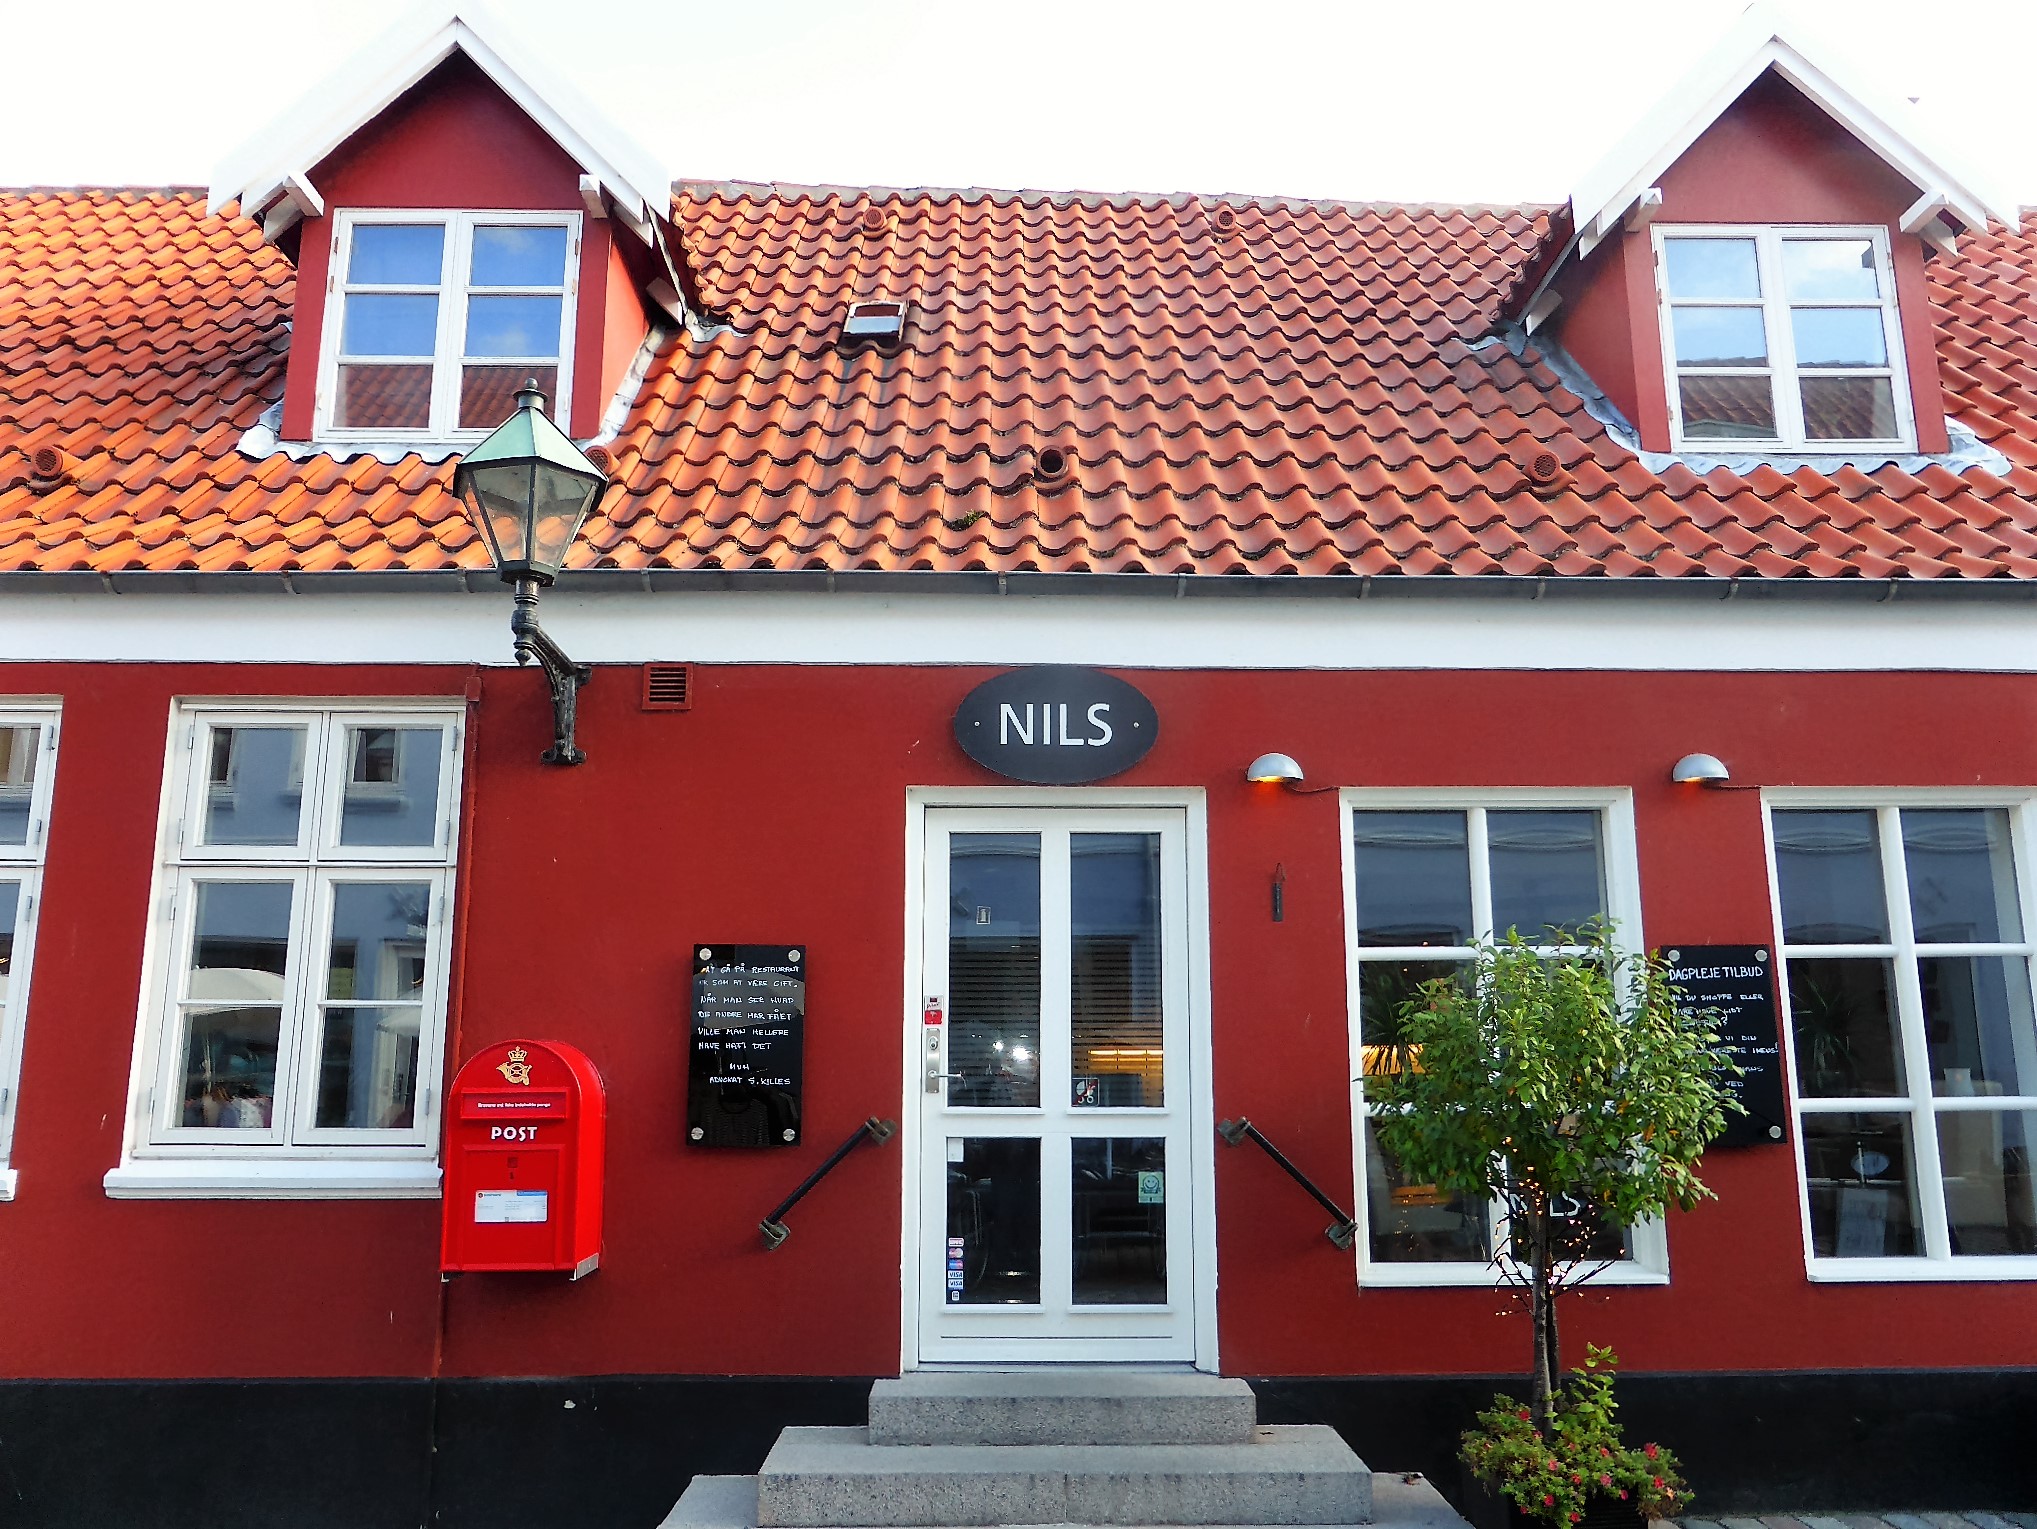 Restaurant Nils ...